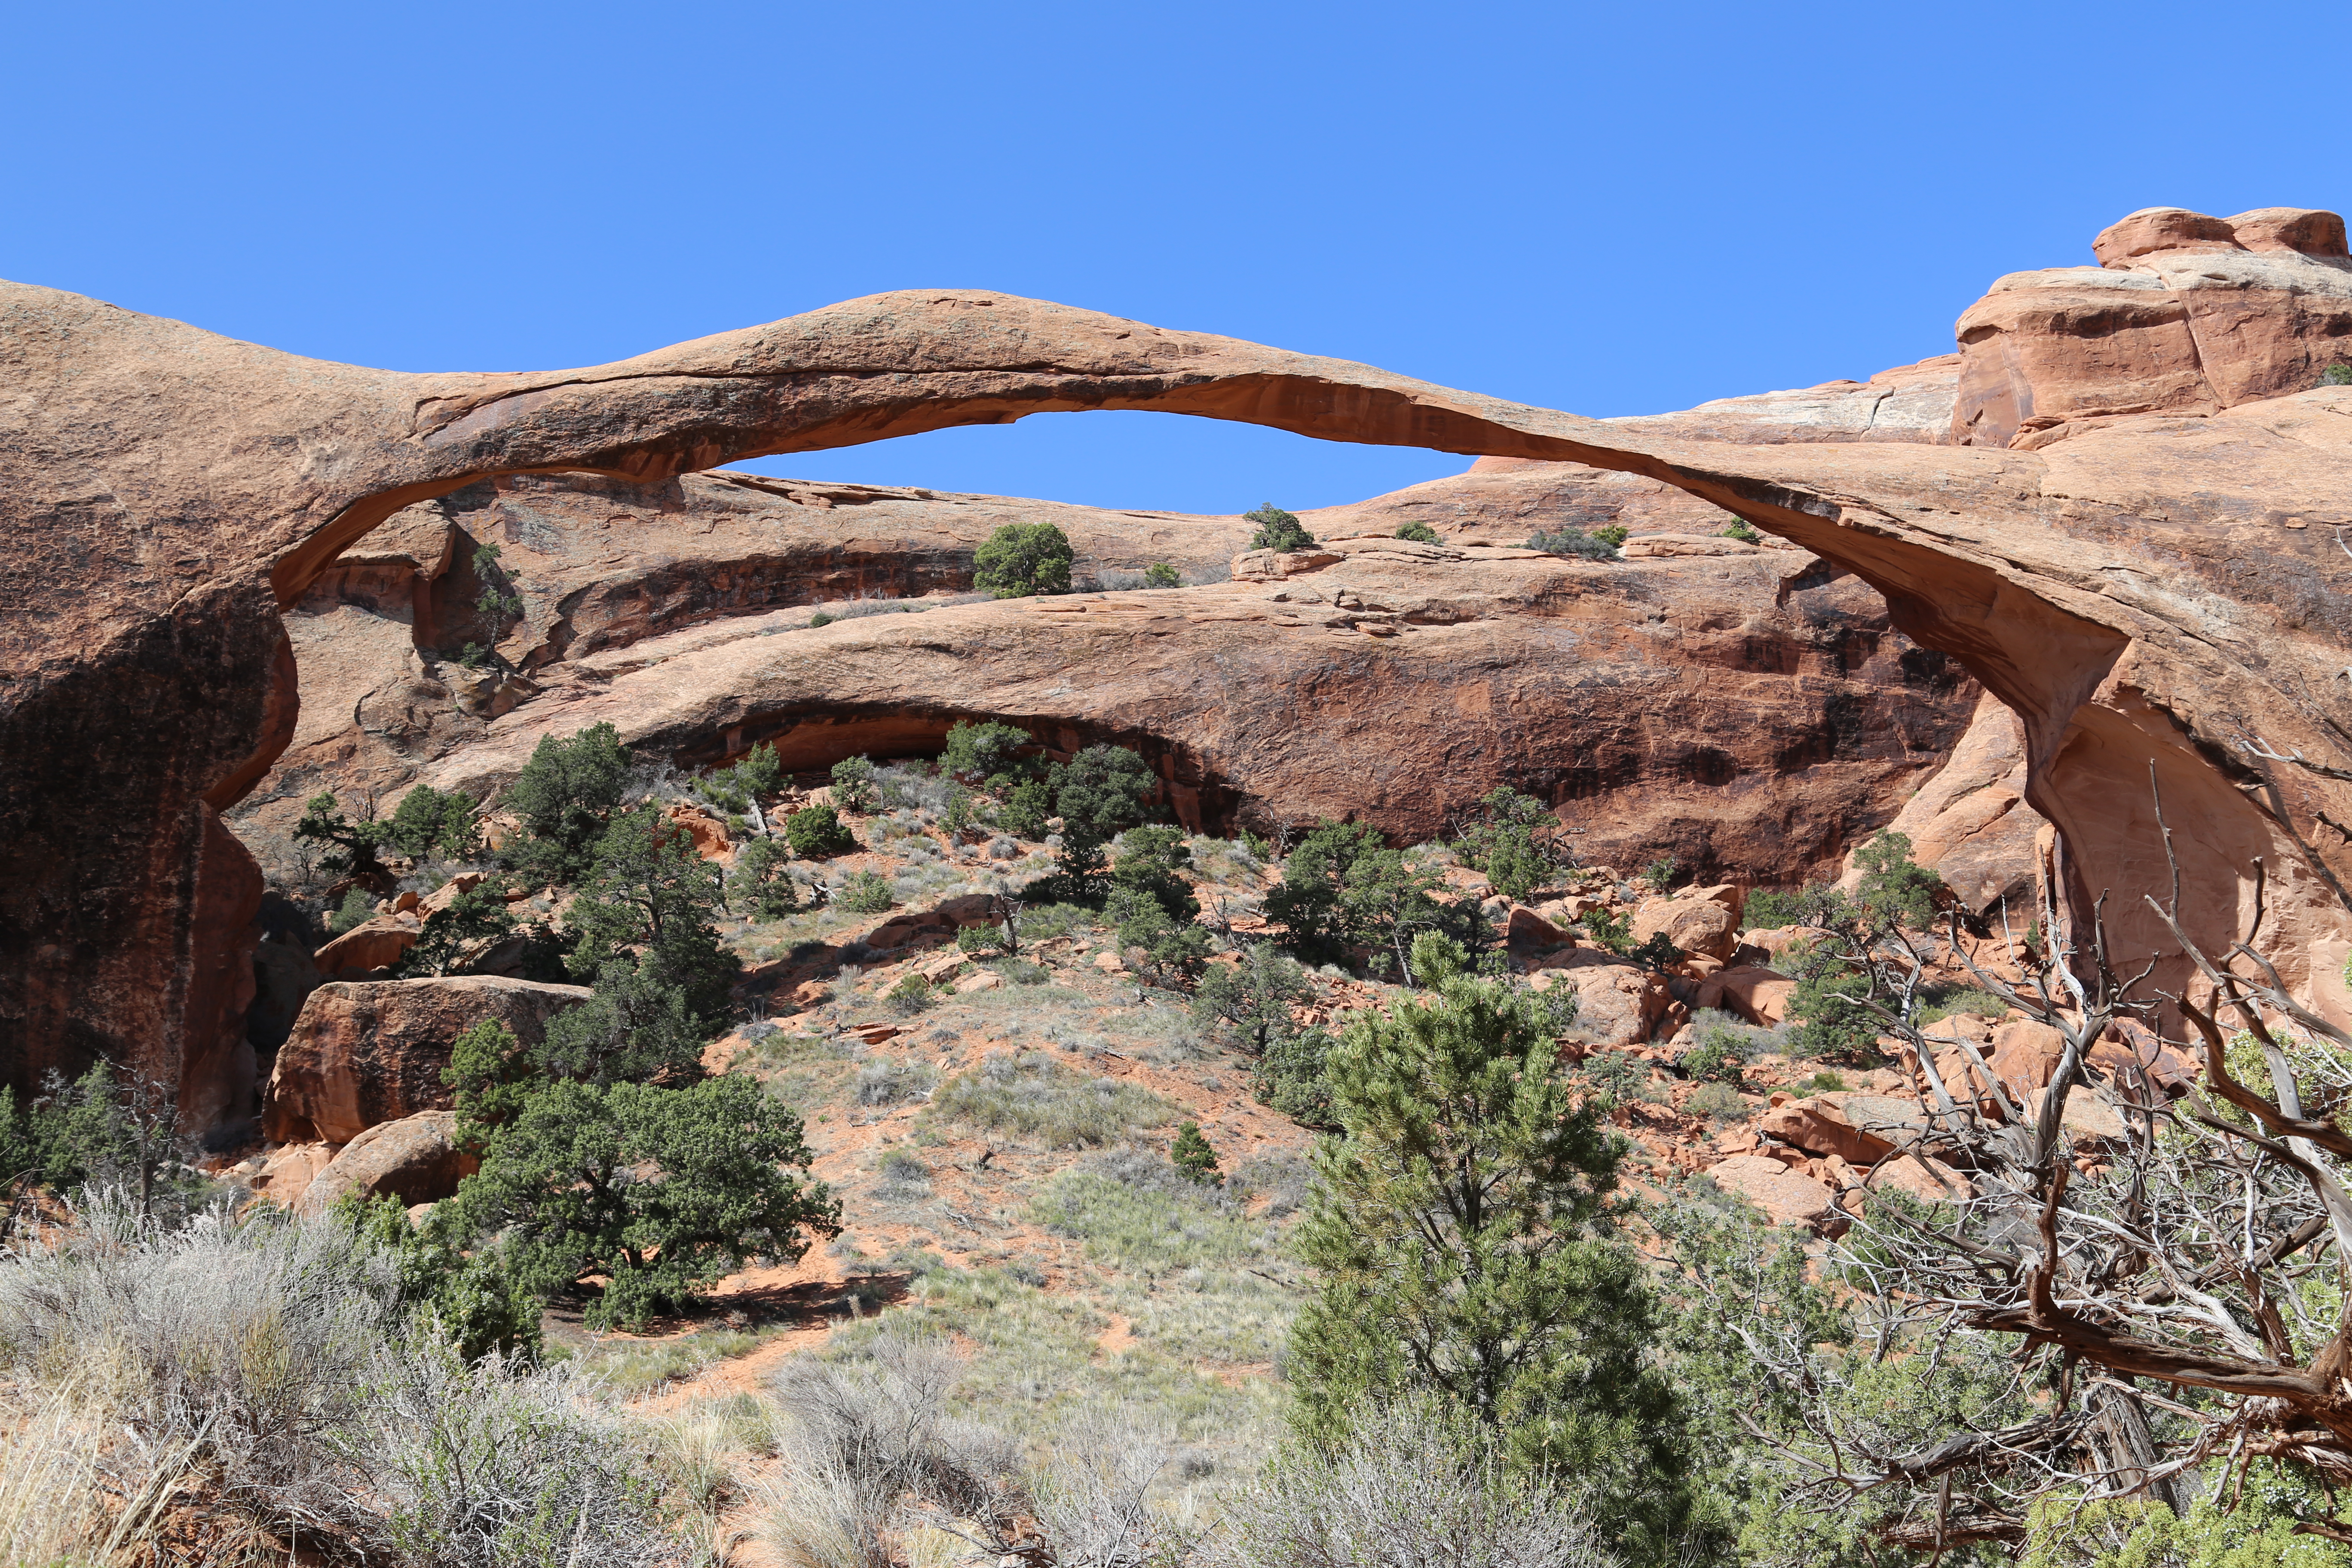 2015 Spring Break - Moab - Scott's Birthday, Landscape Arch in Devil's Garden (Arches National Park)